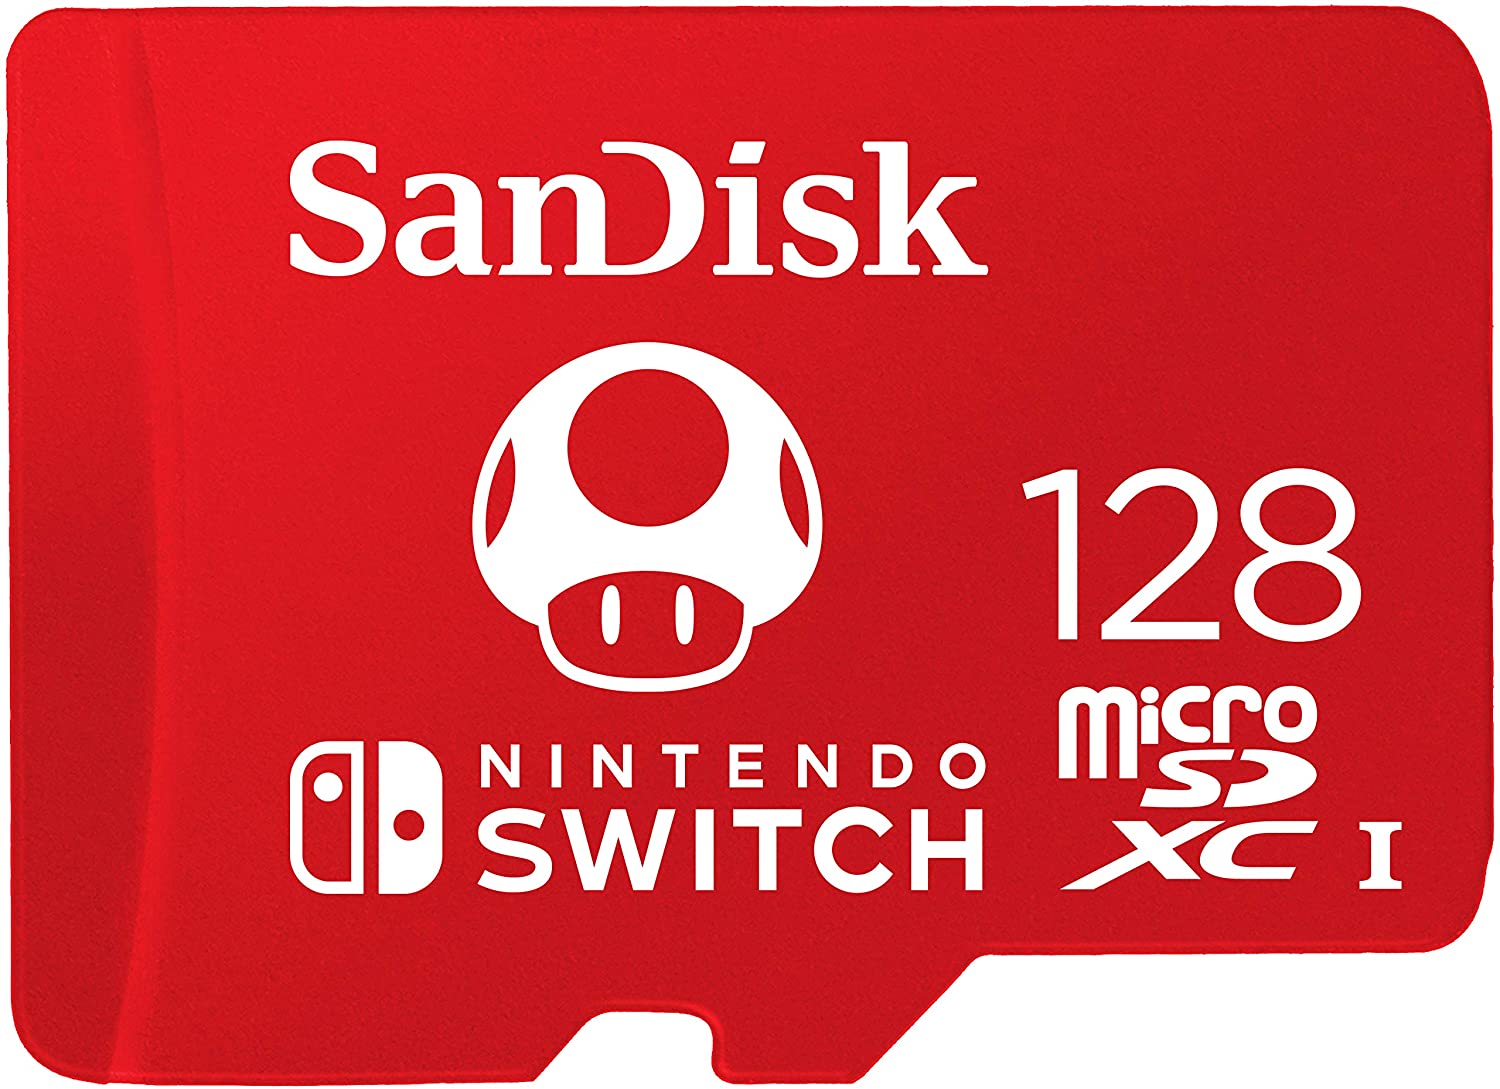 SanDisk 128GB microSD Card for Nintendo Switch